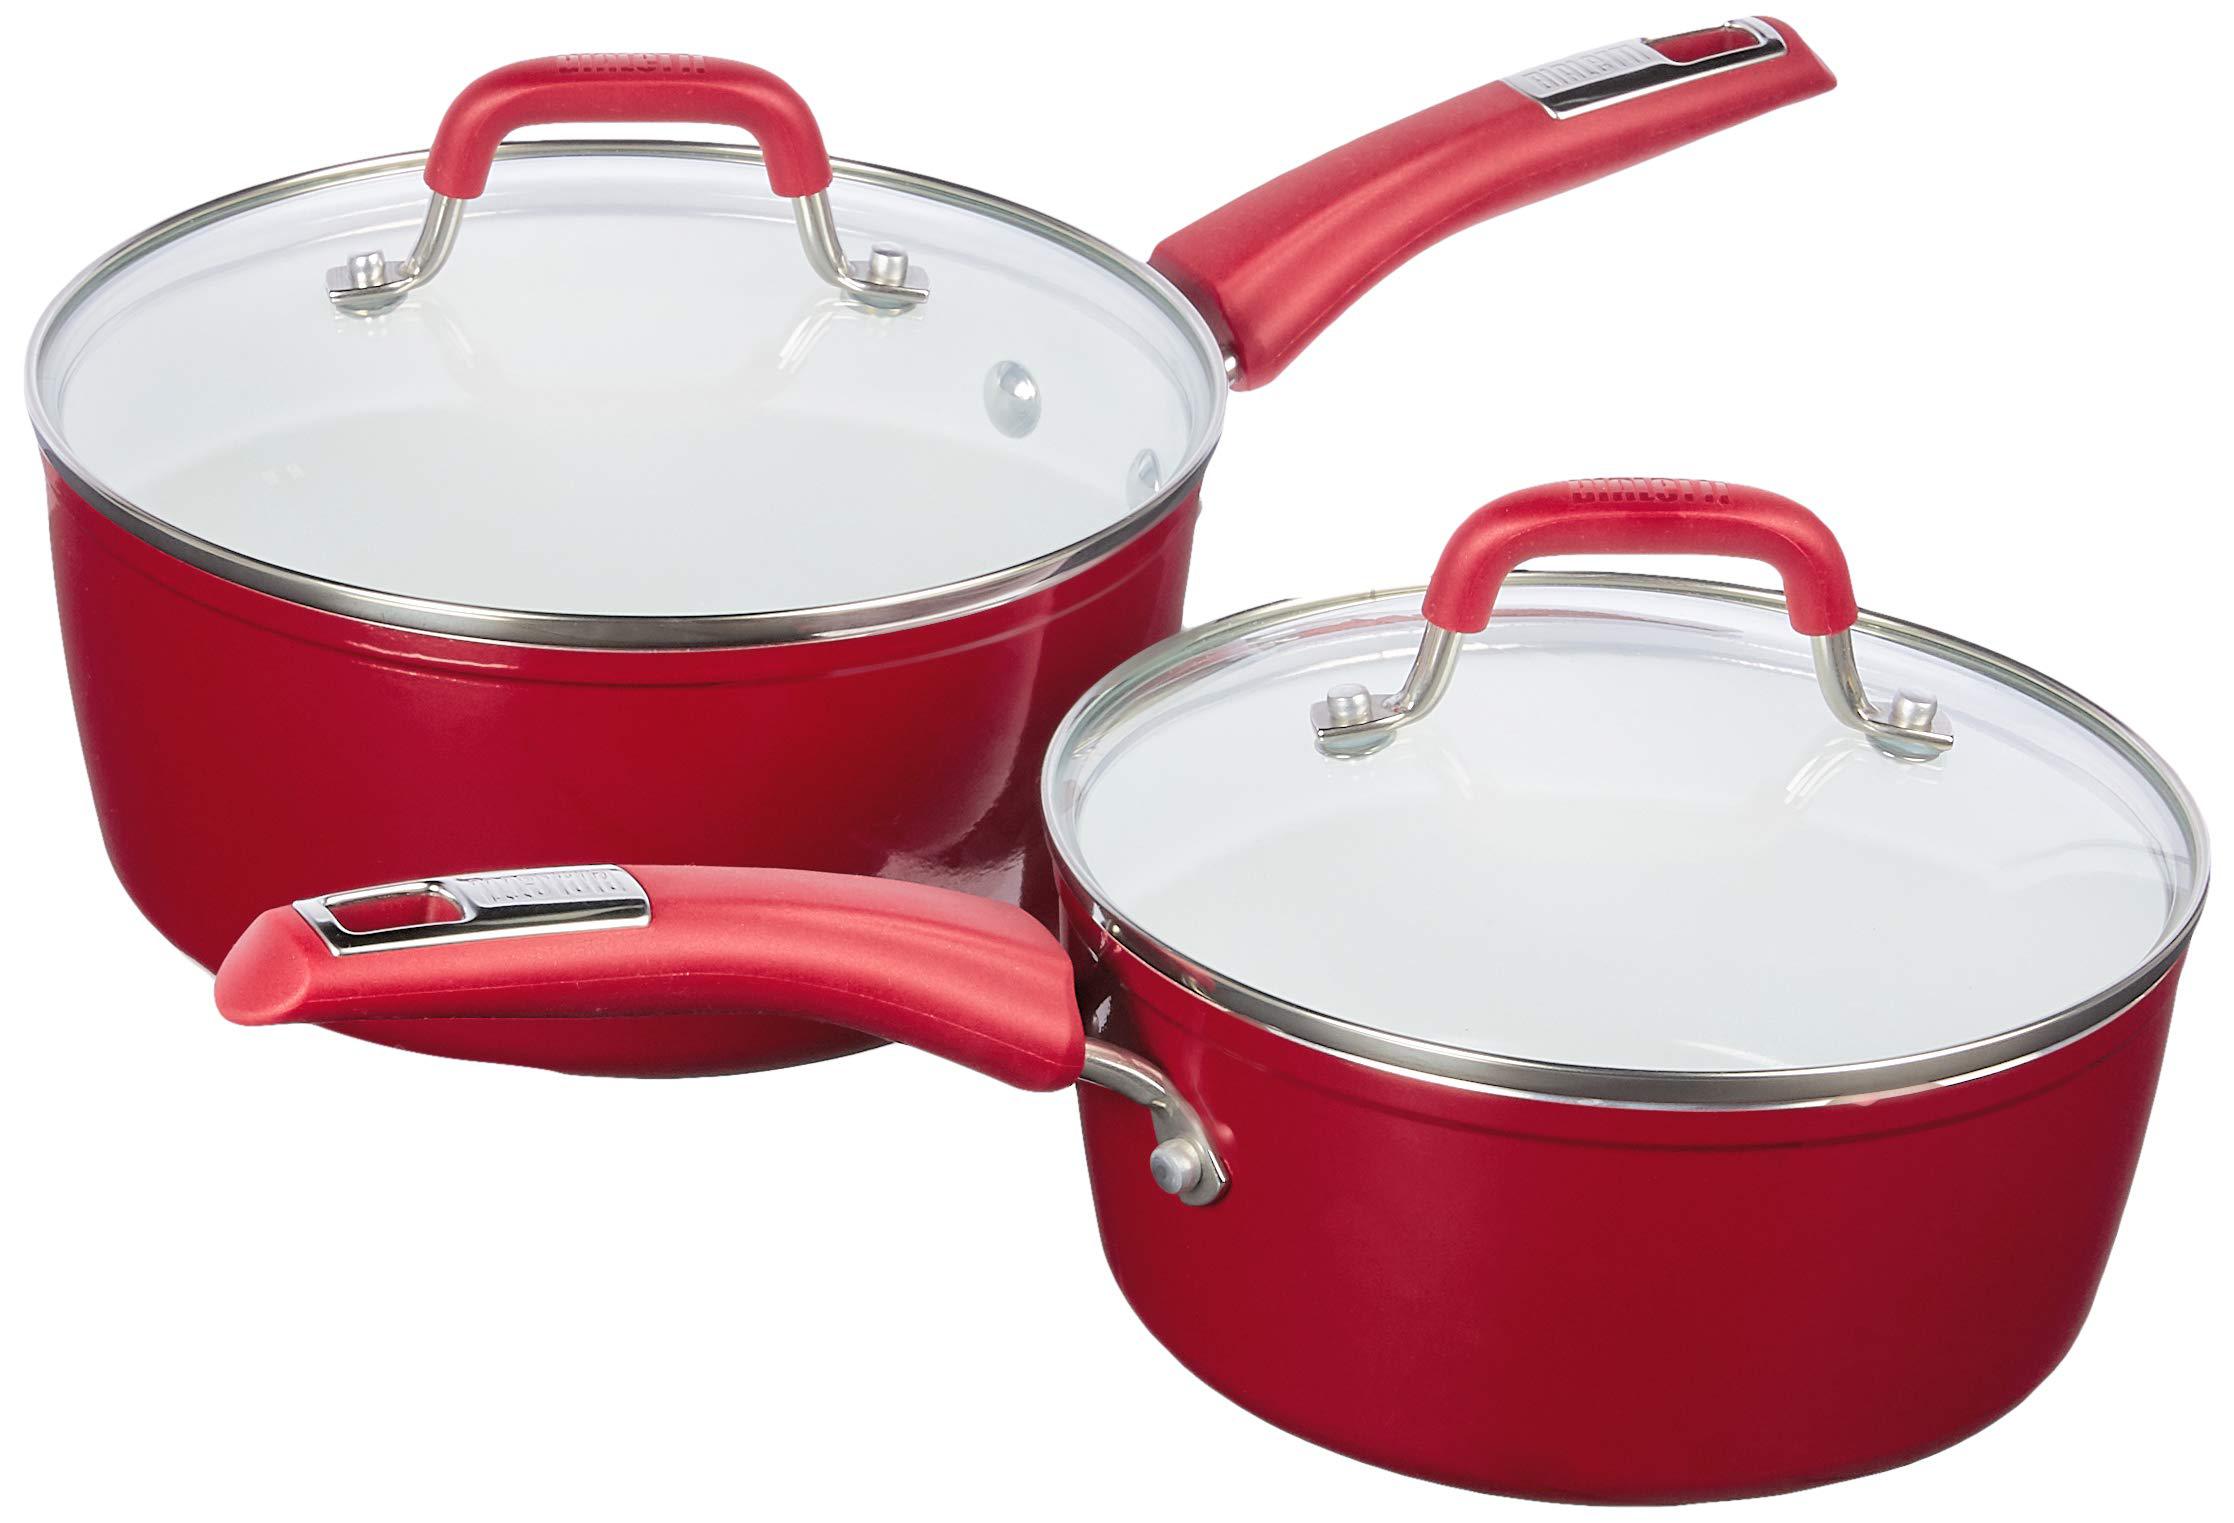 bialetti aeternum ceramic nonstick cookware set, 10 piece cookware set, red/white